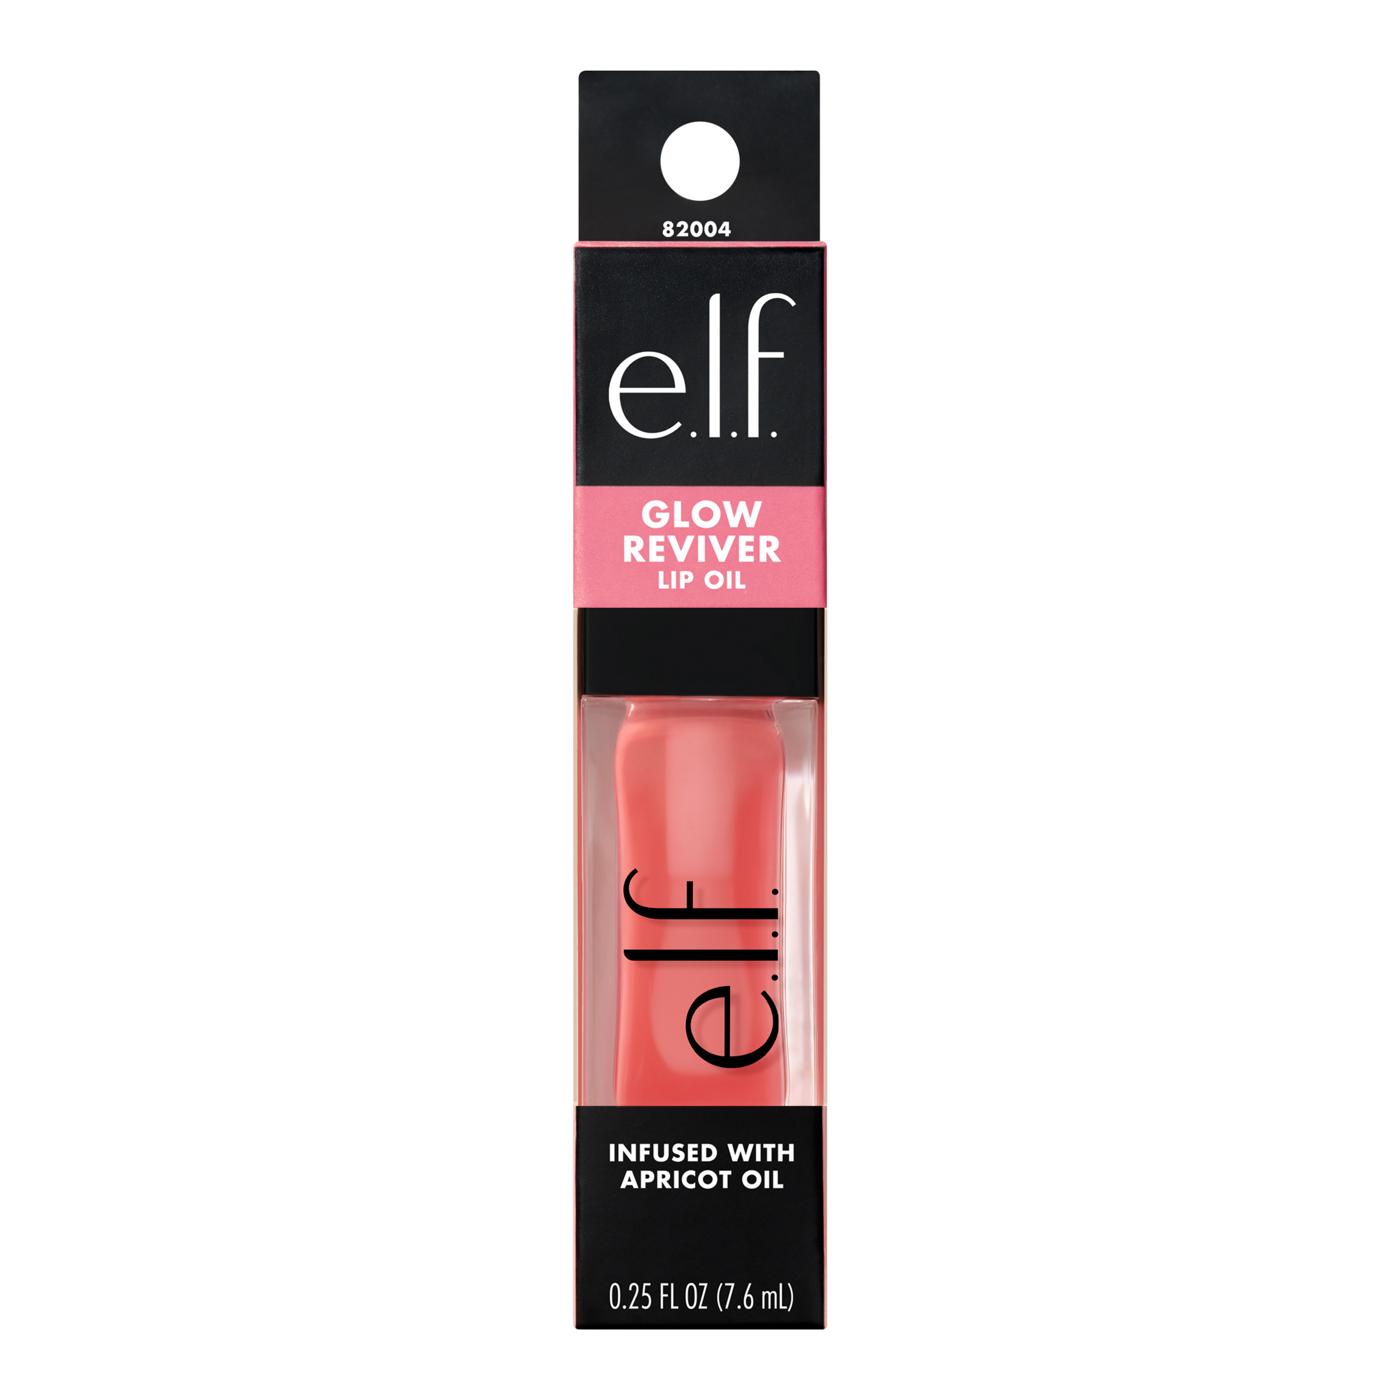 e.l.f. Glow Reviver Lip Oil - Pink; image 1 of 2